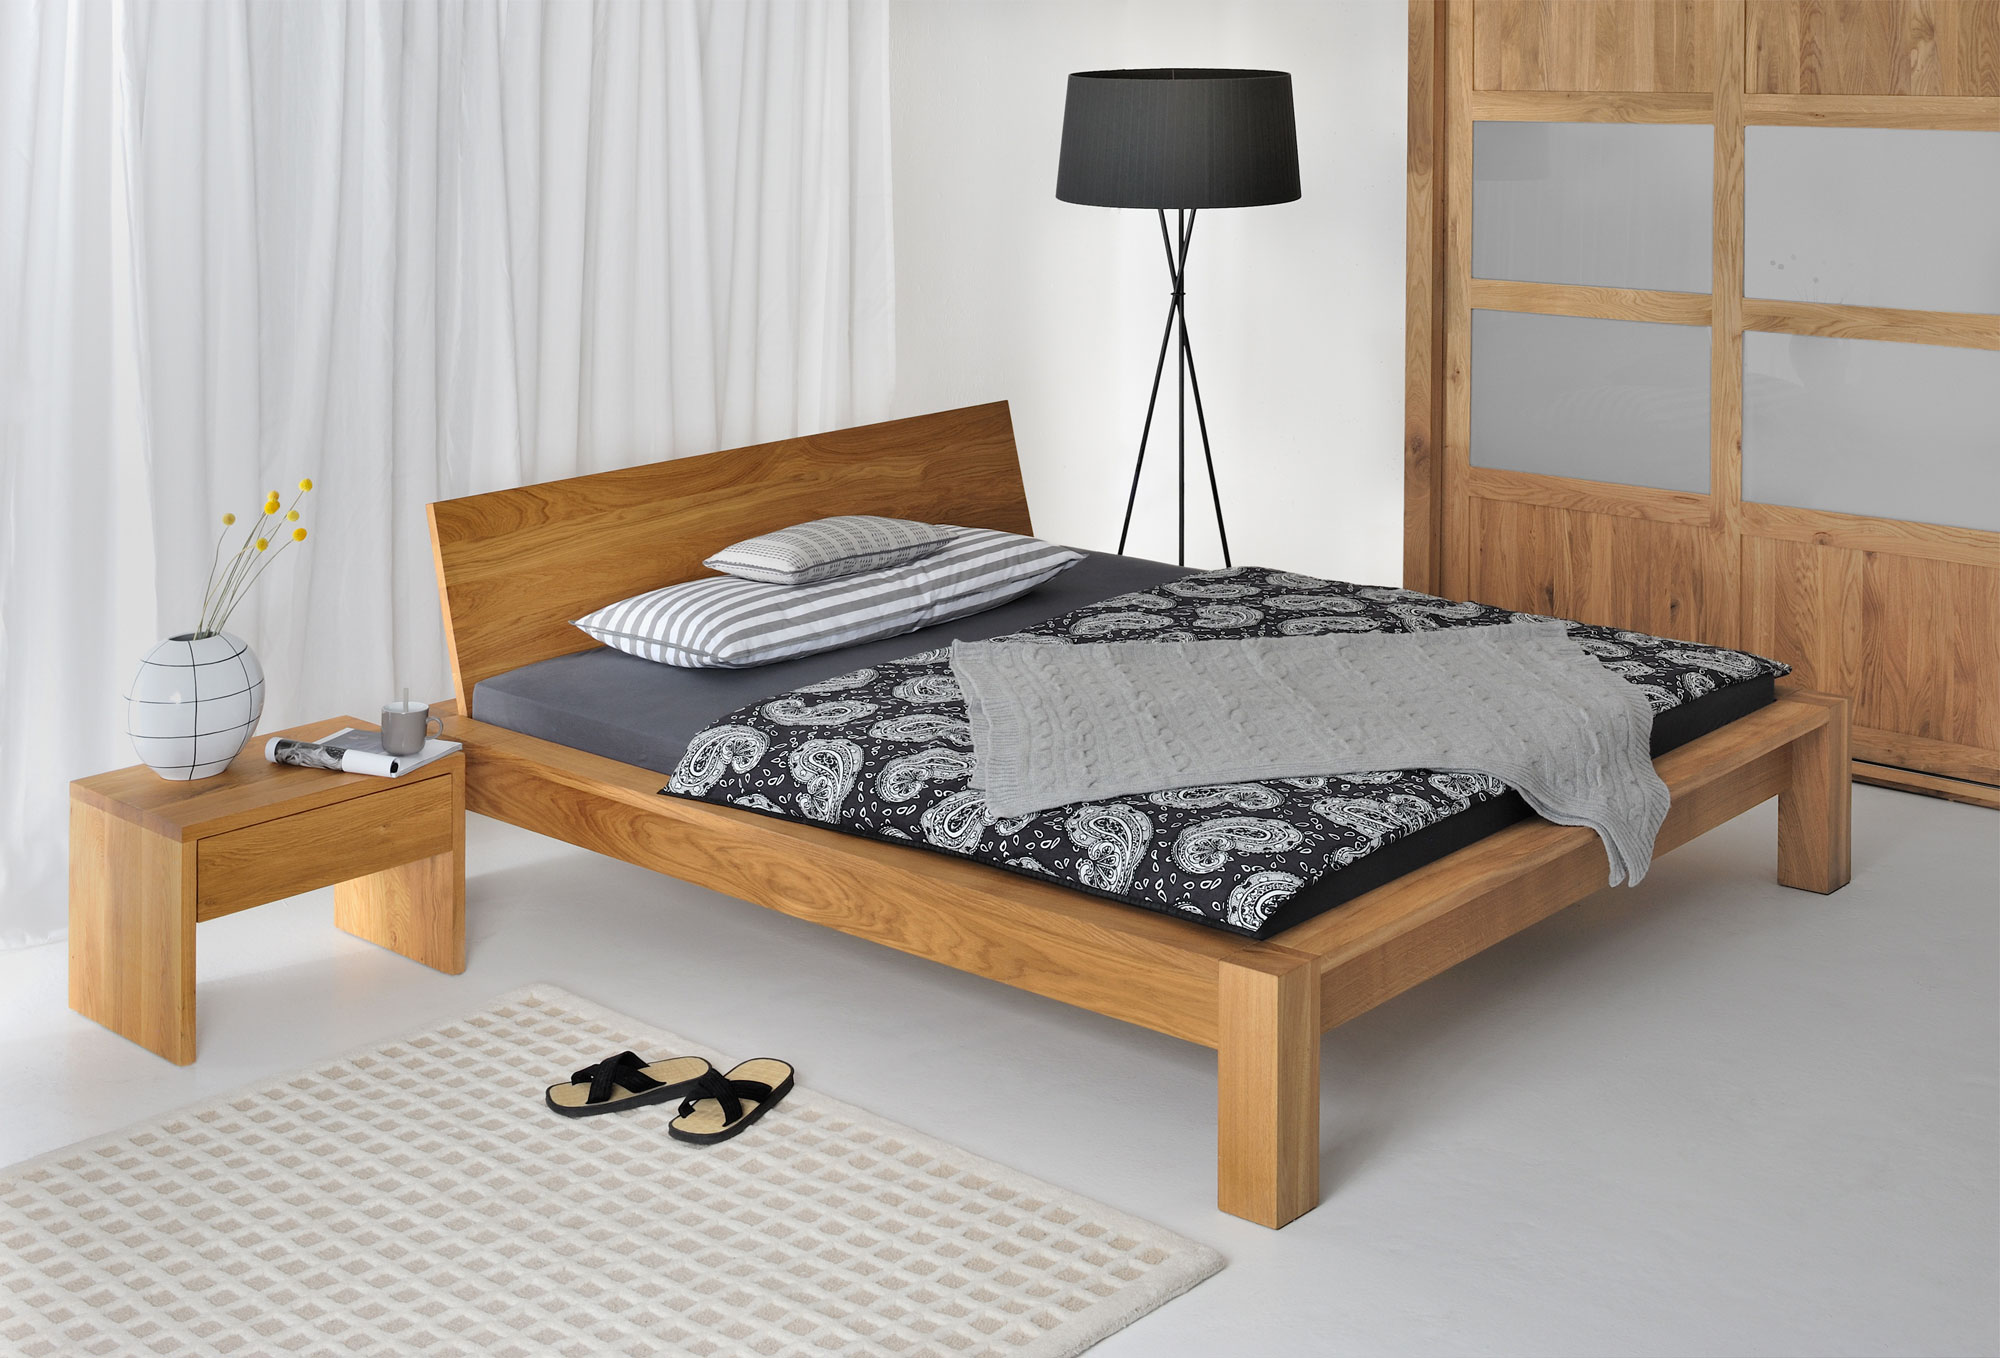 Rustic Oak Bed TAURUS 3159 custom made in solid wood by vitamin design